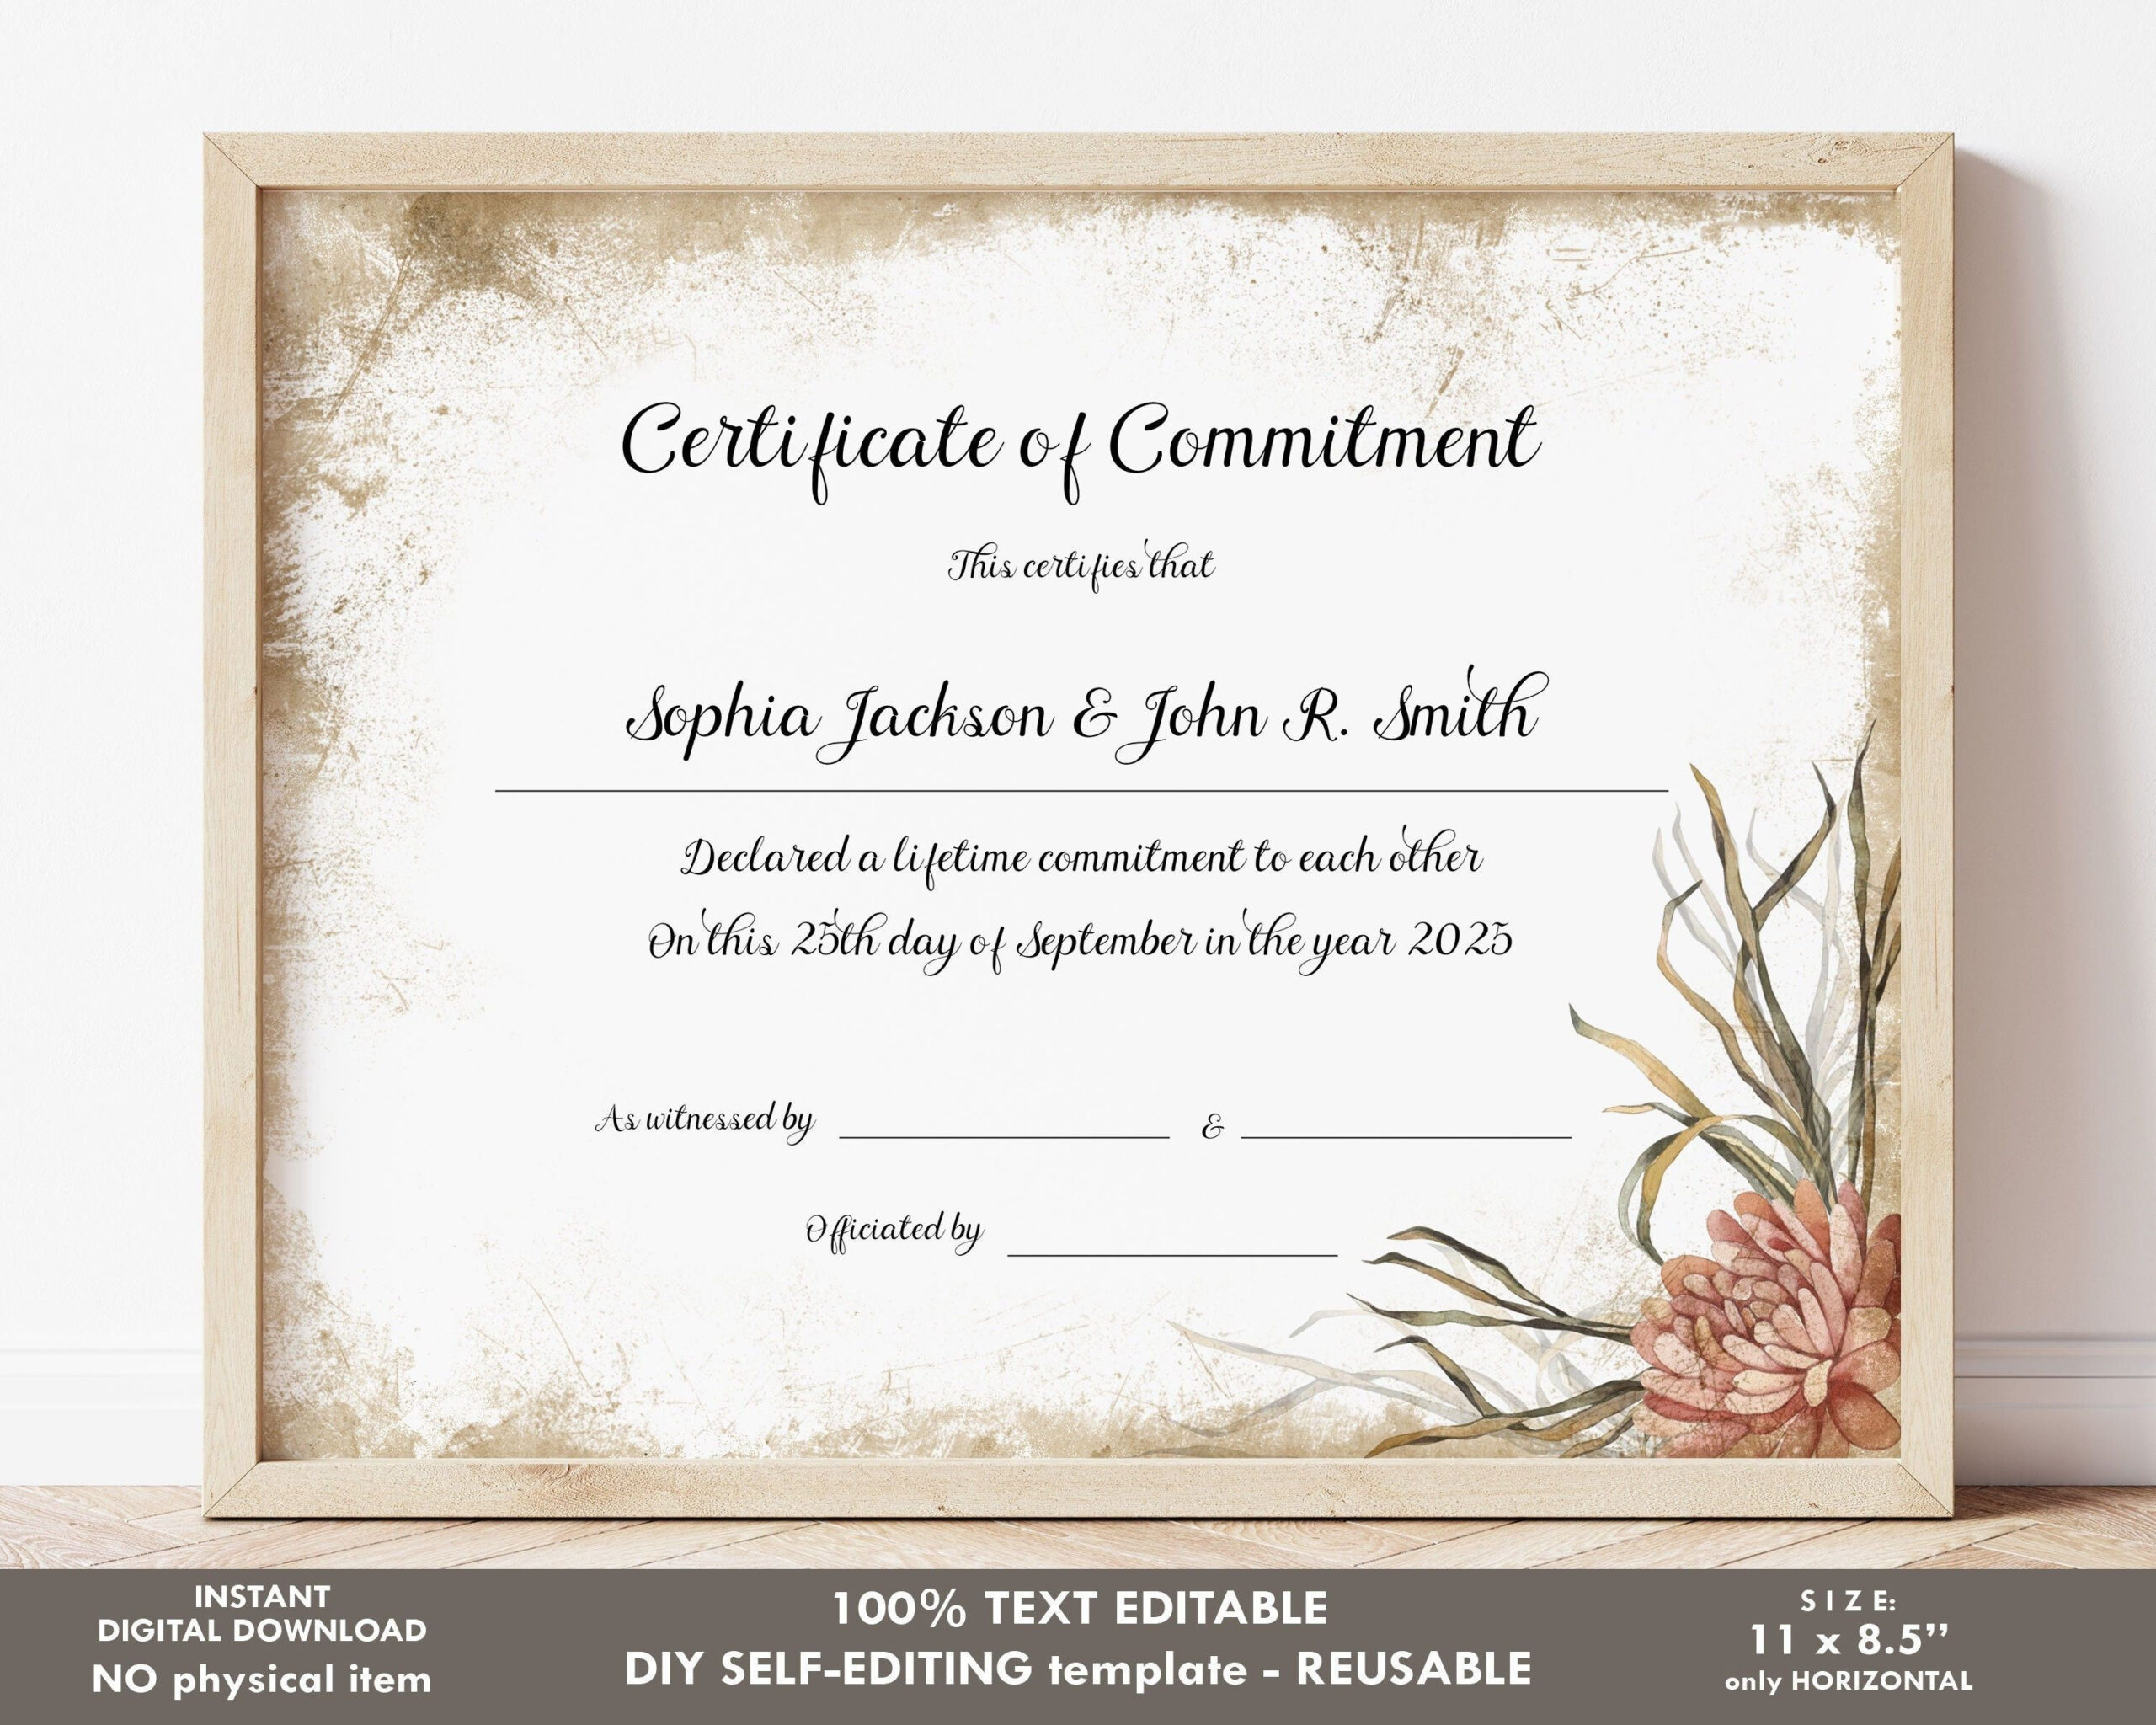 Boho Wedding Commitment Certificate Editable Template, Rustic for Commitment Certificate Free Printable